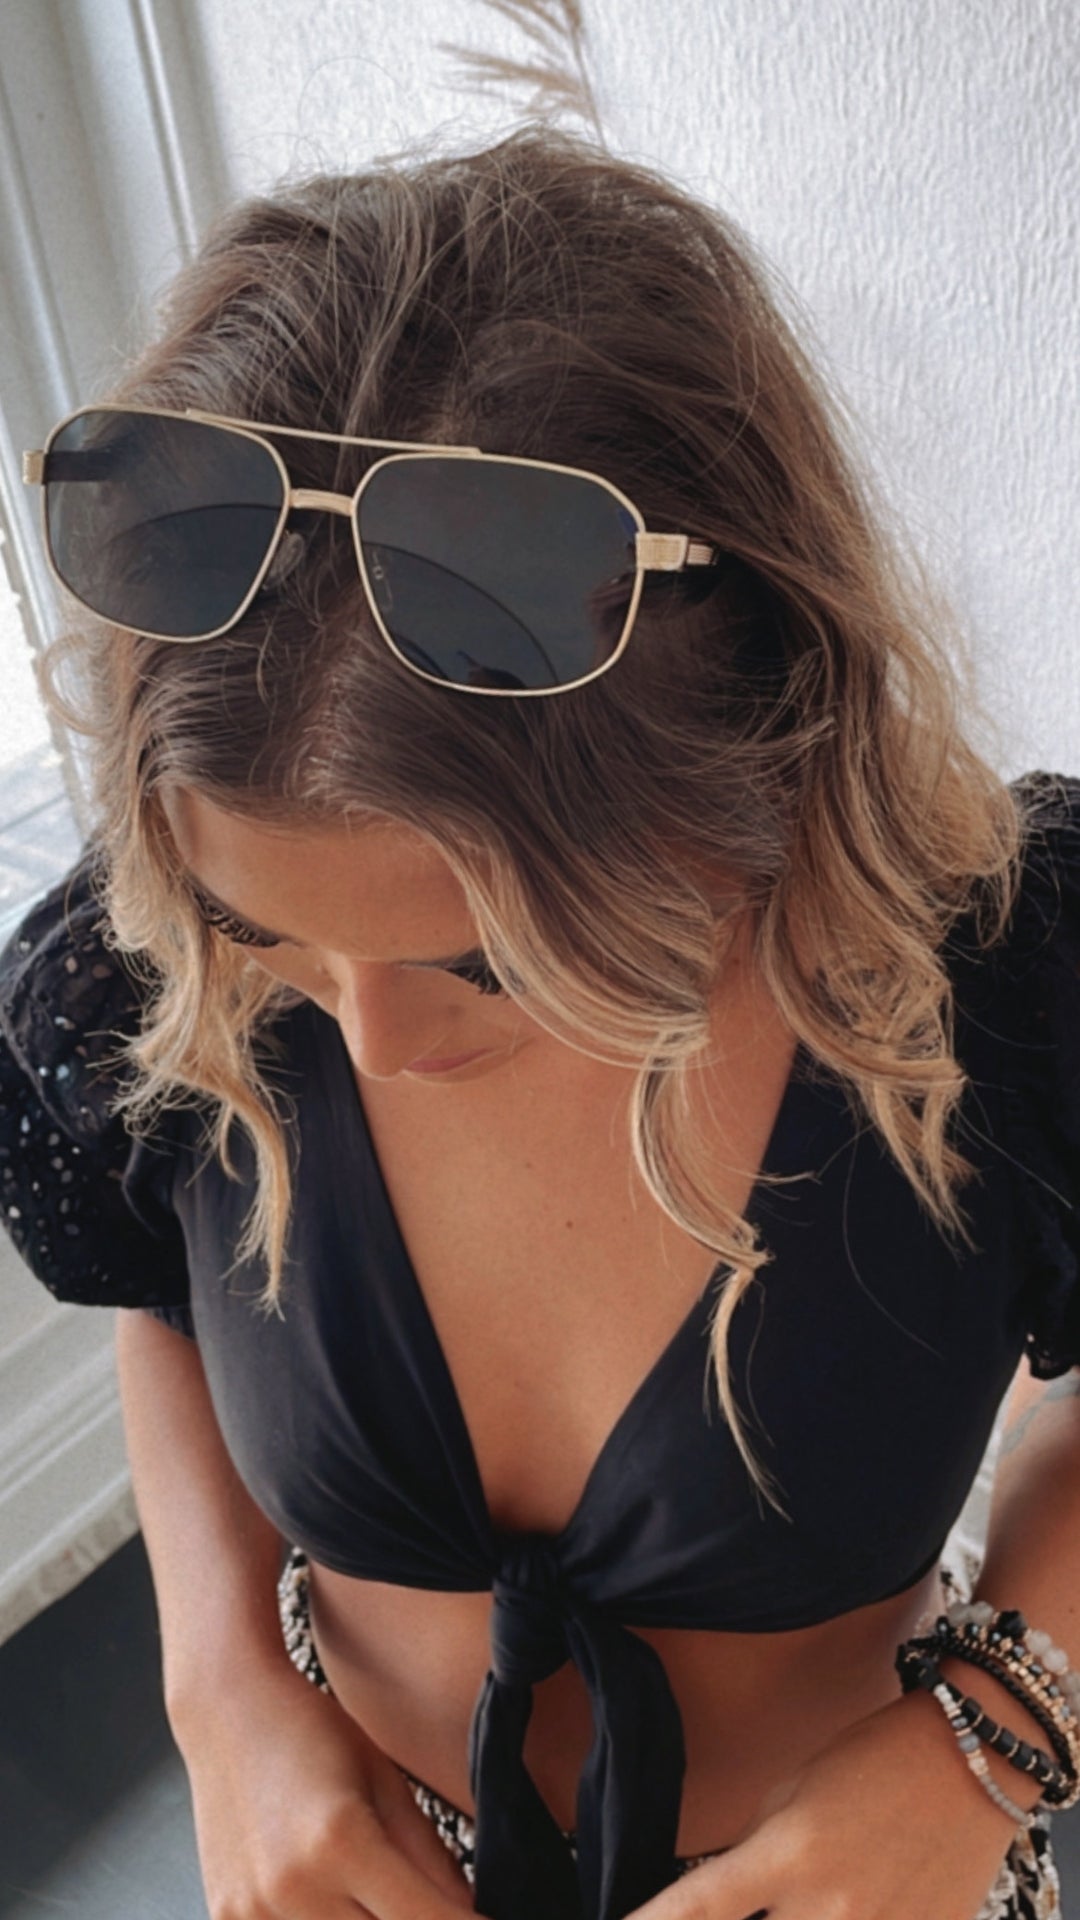 Basic Black Sunglasses With Gold Frame